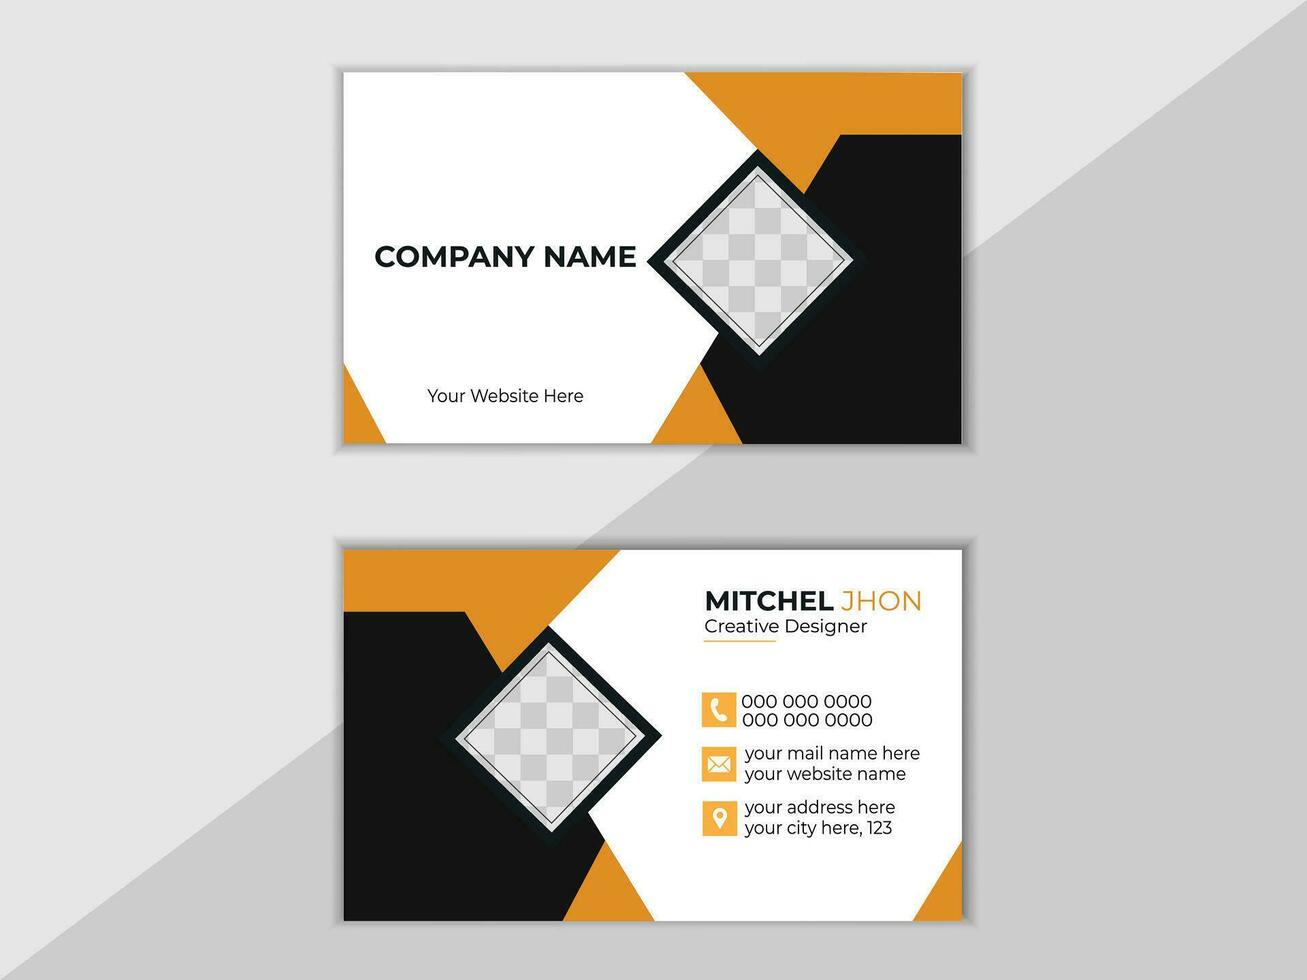 Creative Business Card Design Template vector